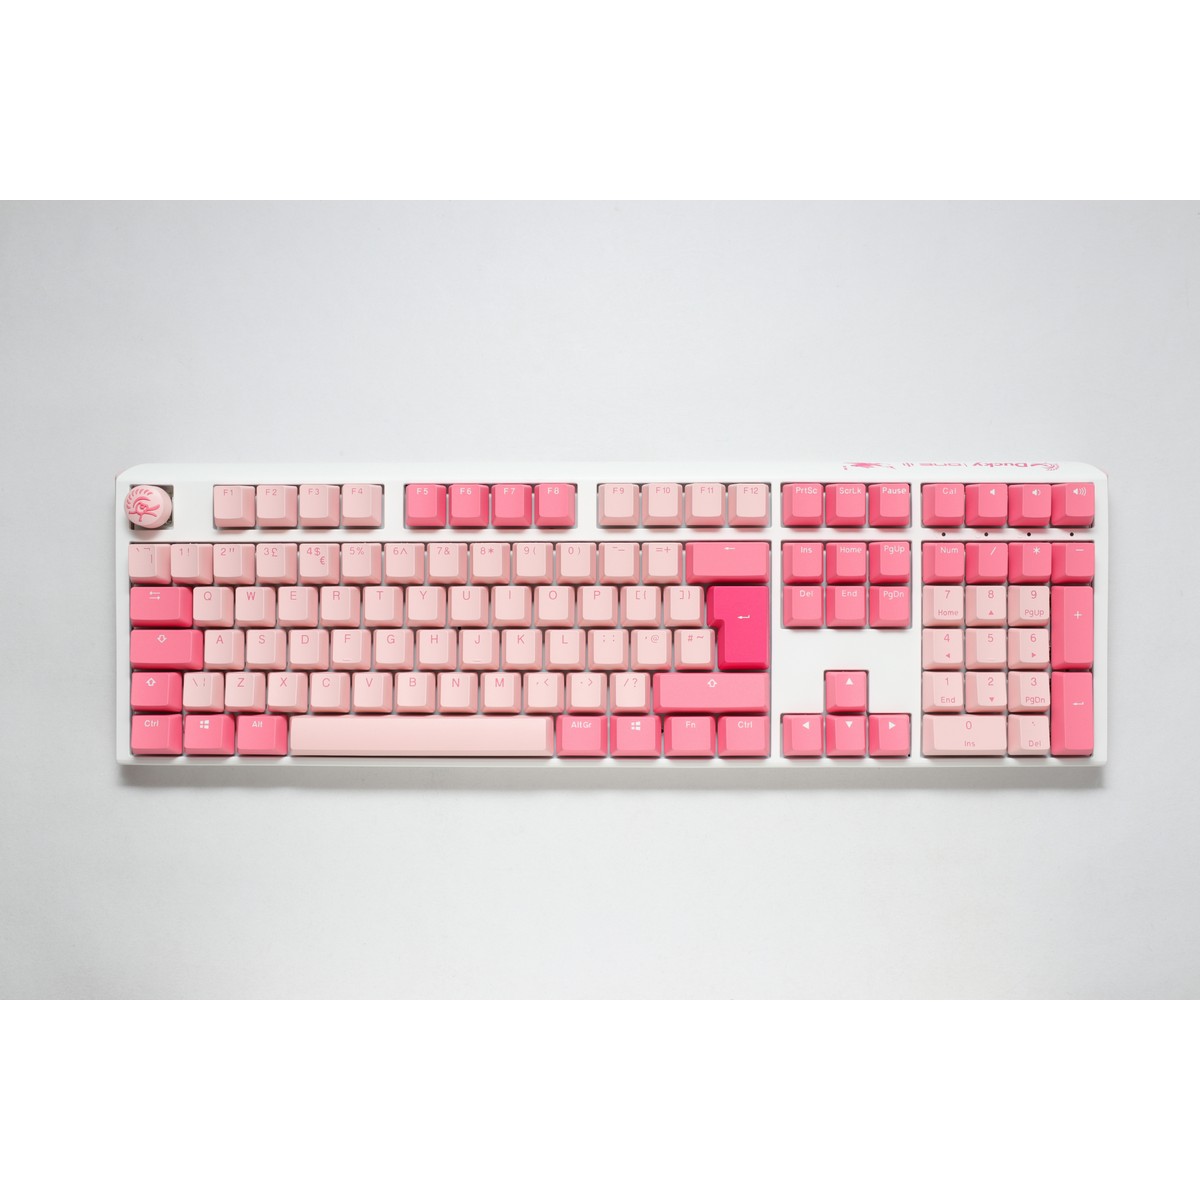 Ducky One 3 Gossamer Pink USB Cherry MX Brown Mechanical Gaming Keyboard UK Layo